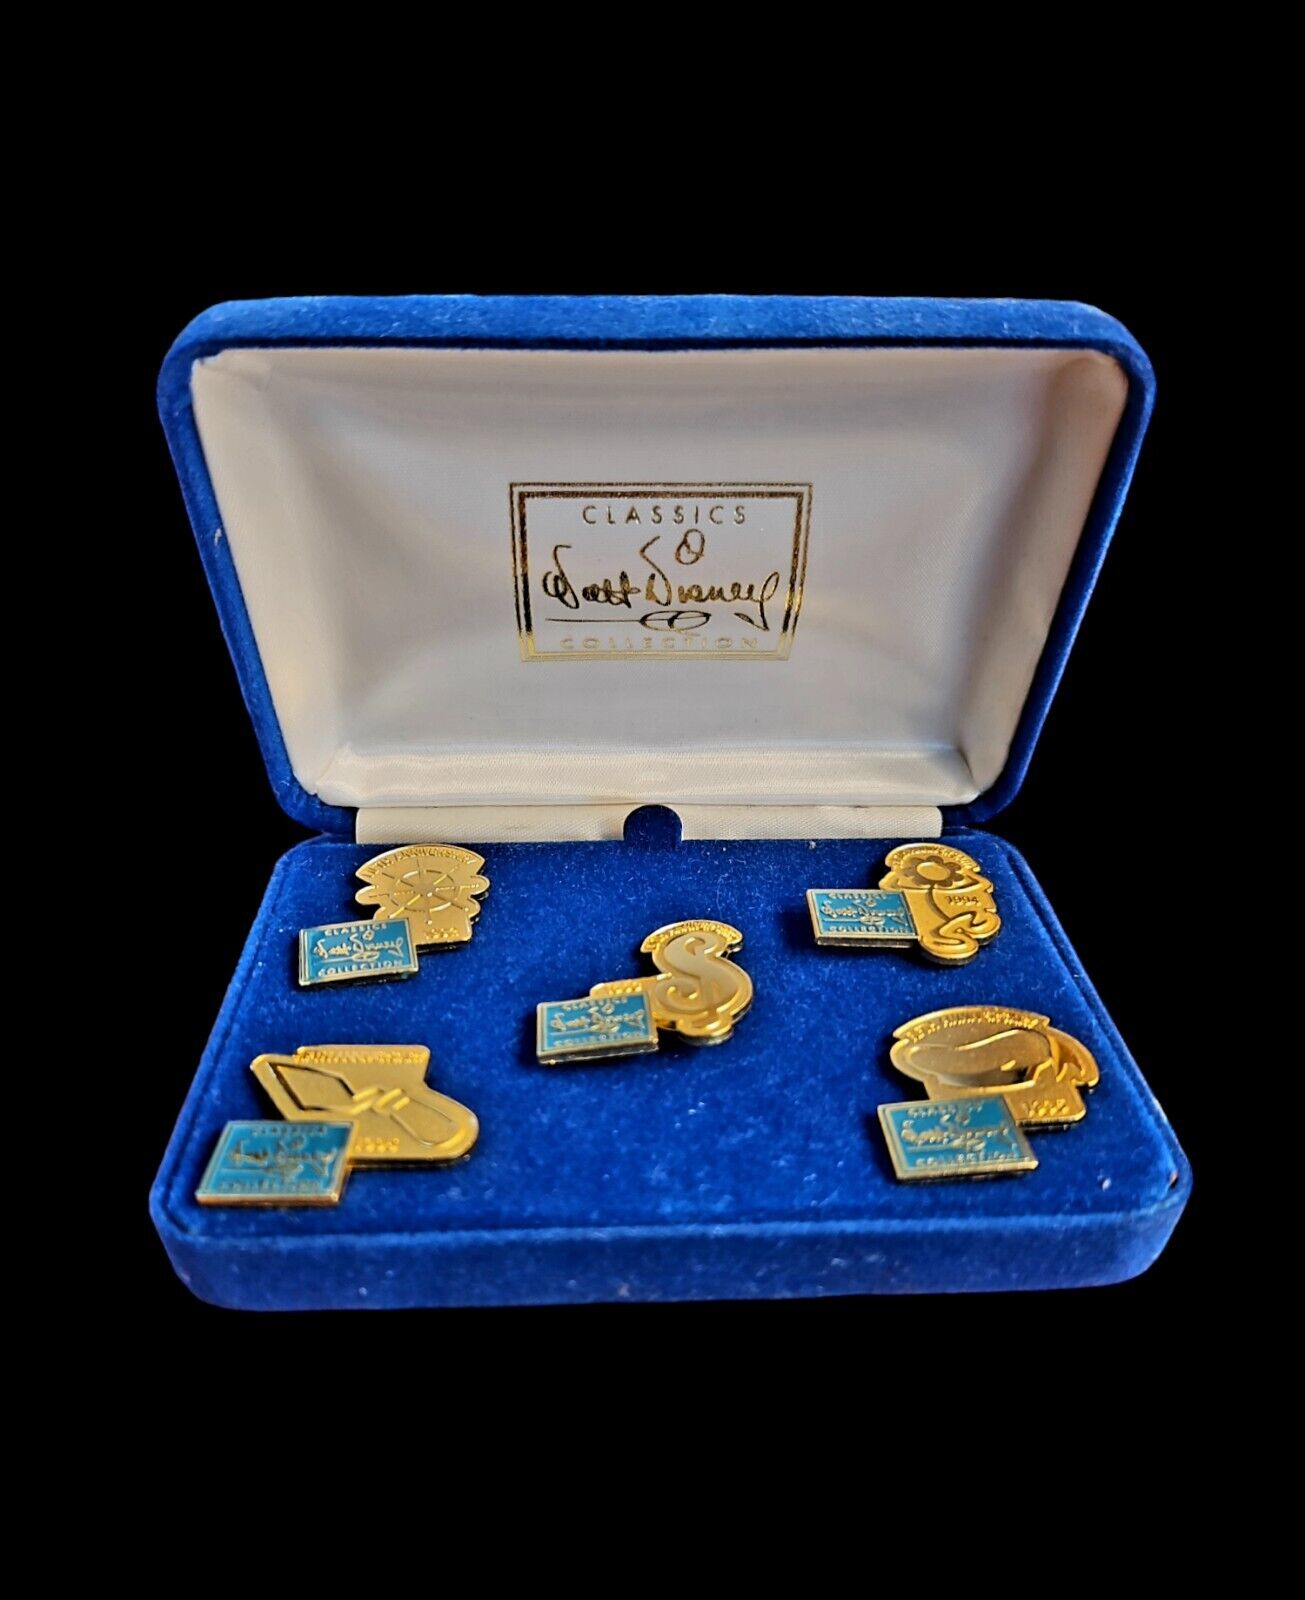 Vintage 1990s Disney Classics Pin Set